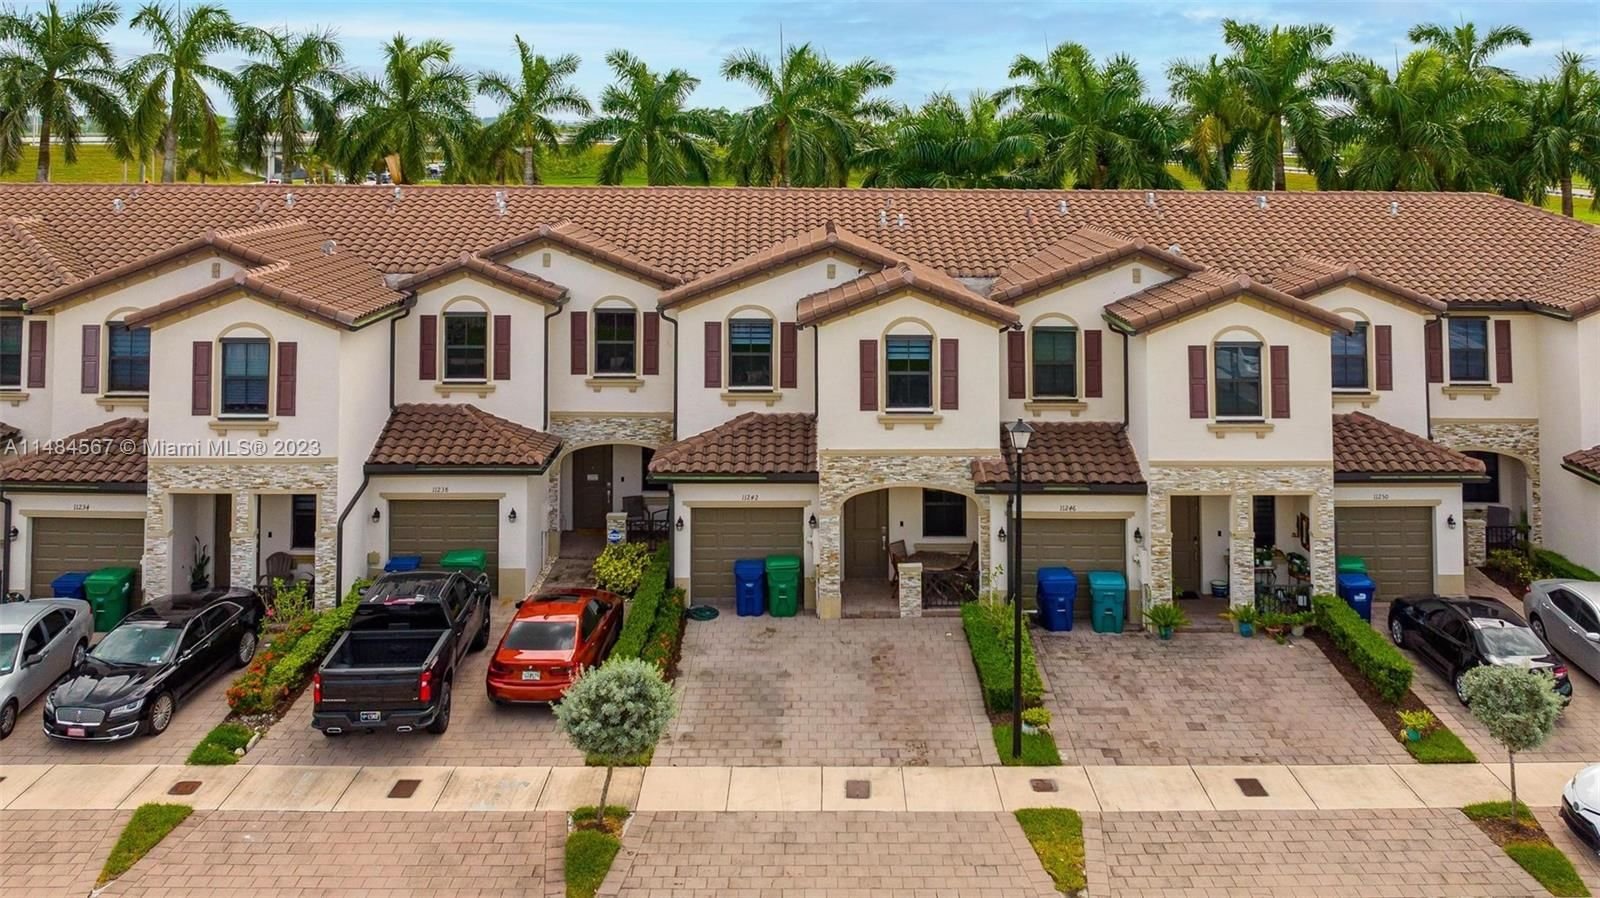 Real estate property located at 11242 250th Ter, Miami-Dade County, COCO PALM VILLAS, Homestead, FL